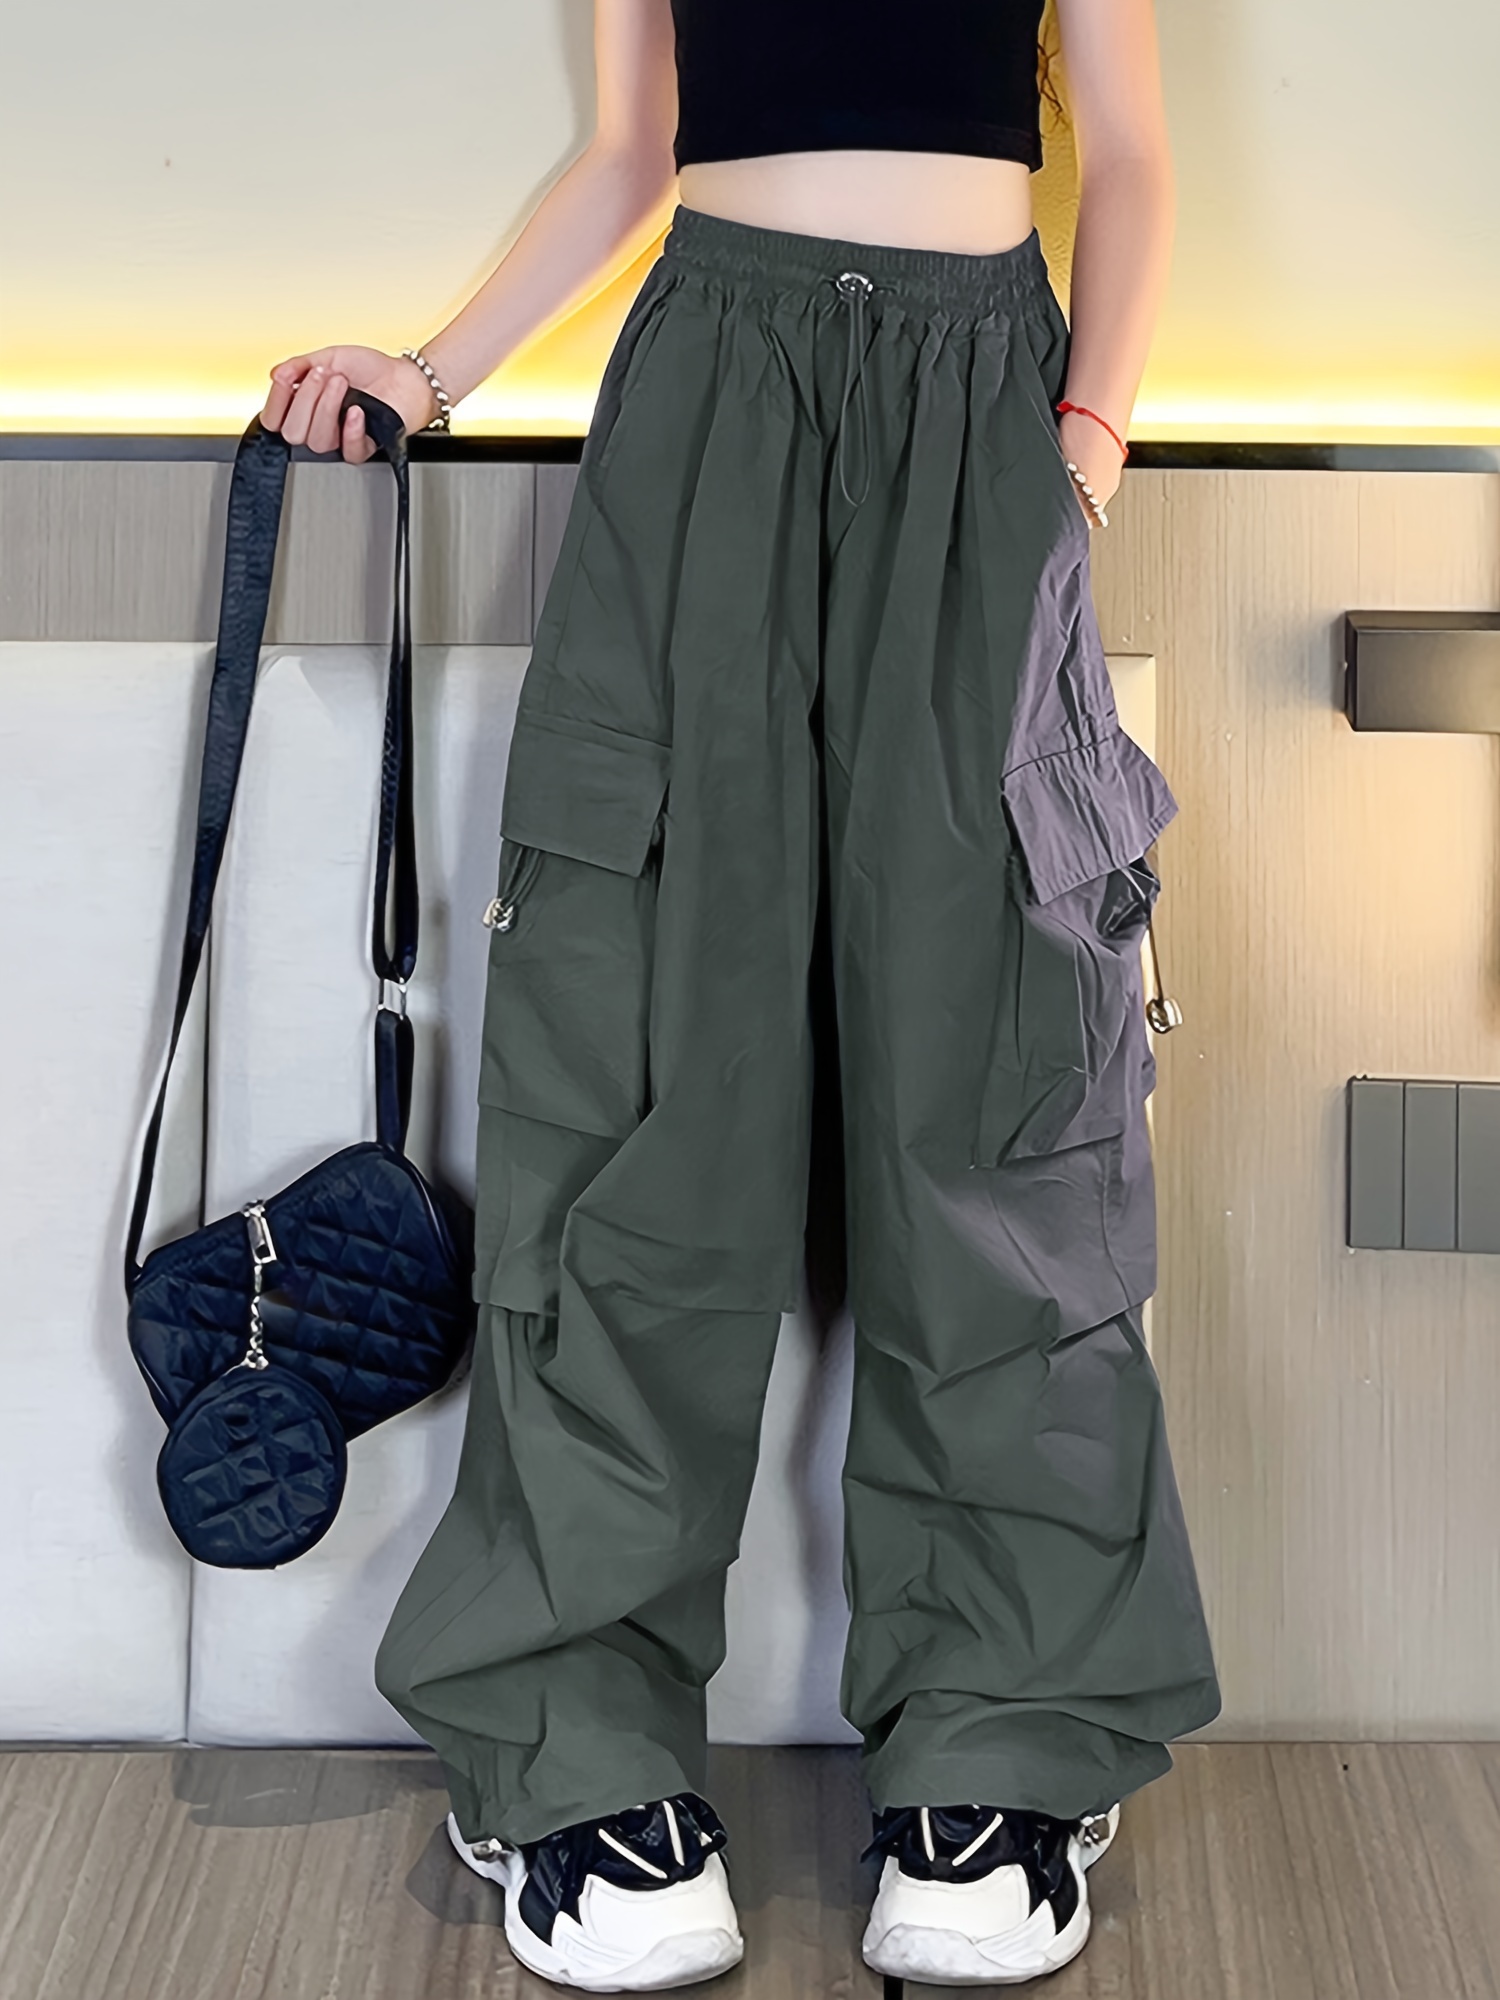 Gwiyeopda Toddler Baby Girl Tank Top Elastic Waist Cargo Pants Leggings  Summer Outfits Set 0-5 Years 